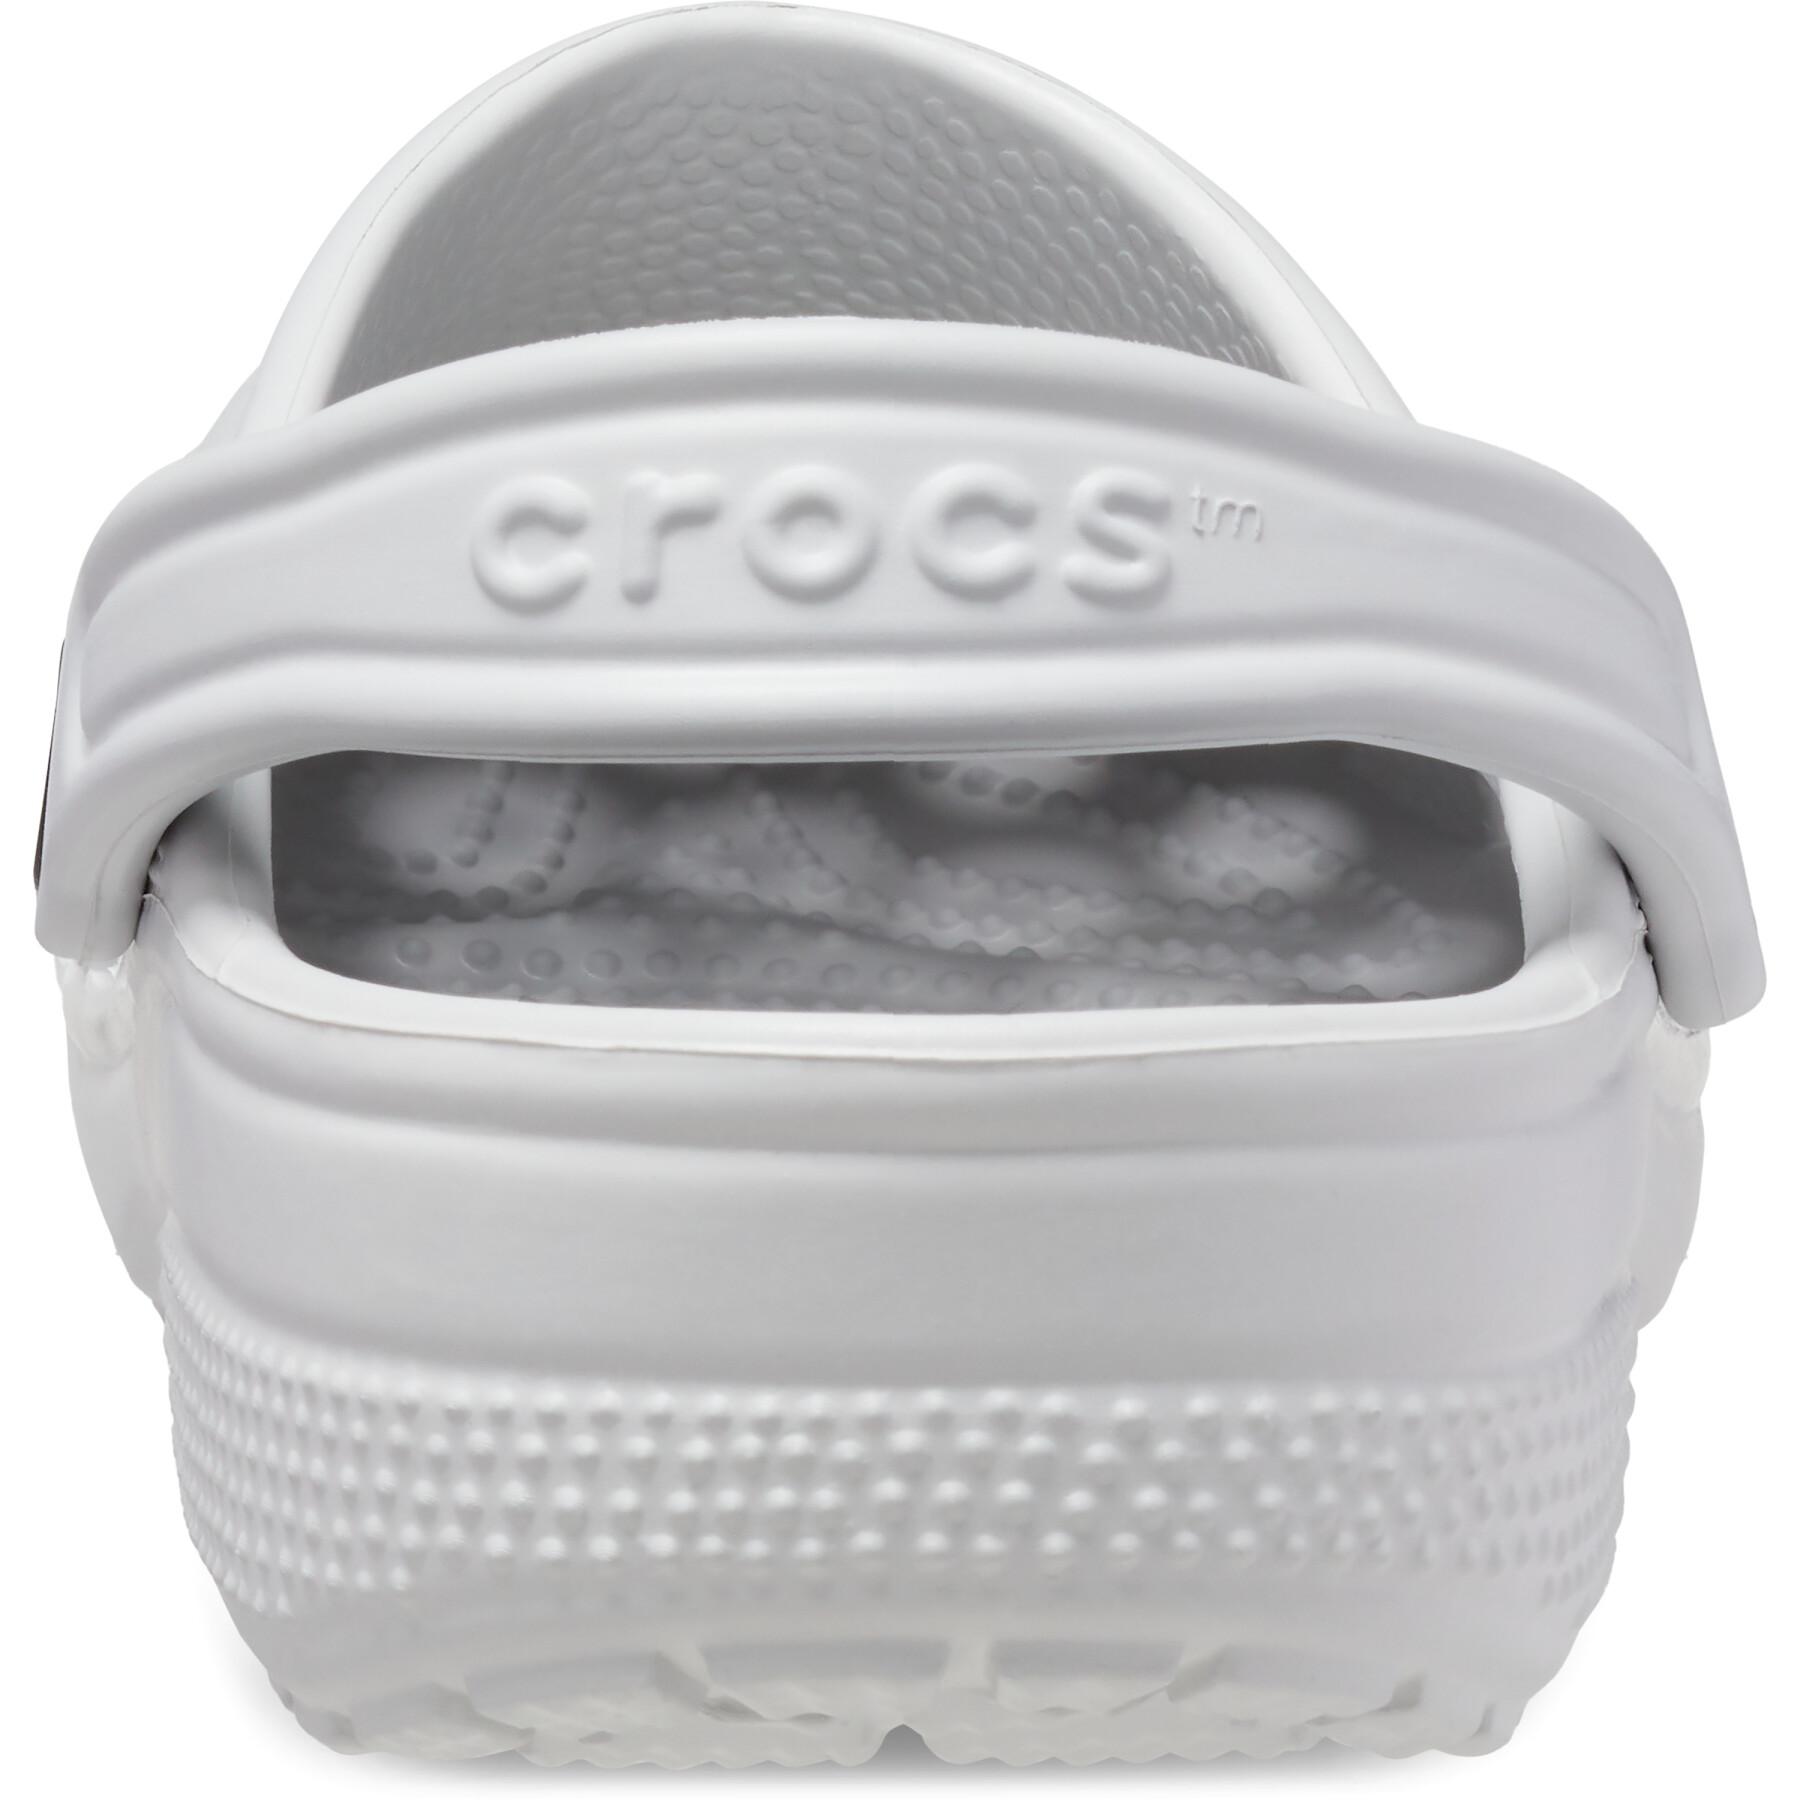 Zuecos Crocs Classic